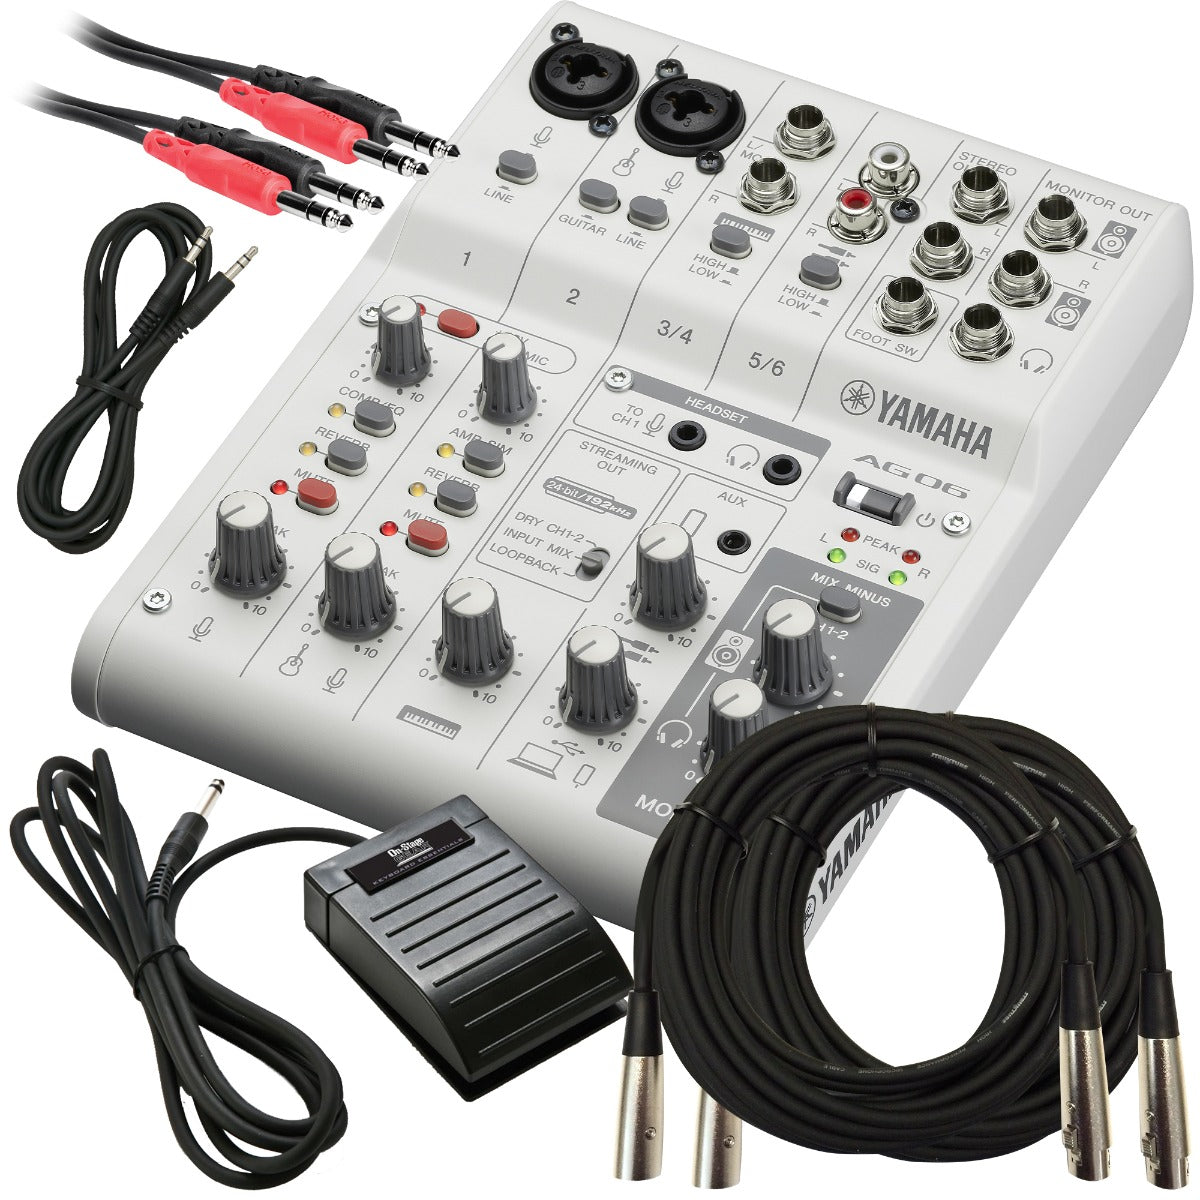 Yamaha AG06 Mk2 Live Streaming Mixer and USB Audio Interface